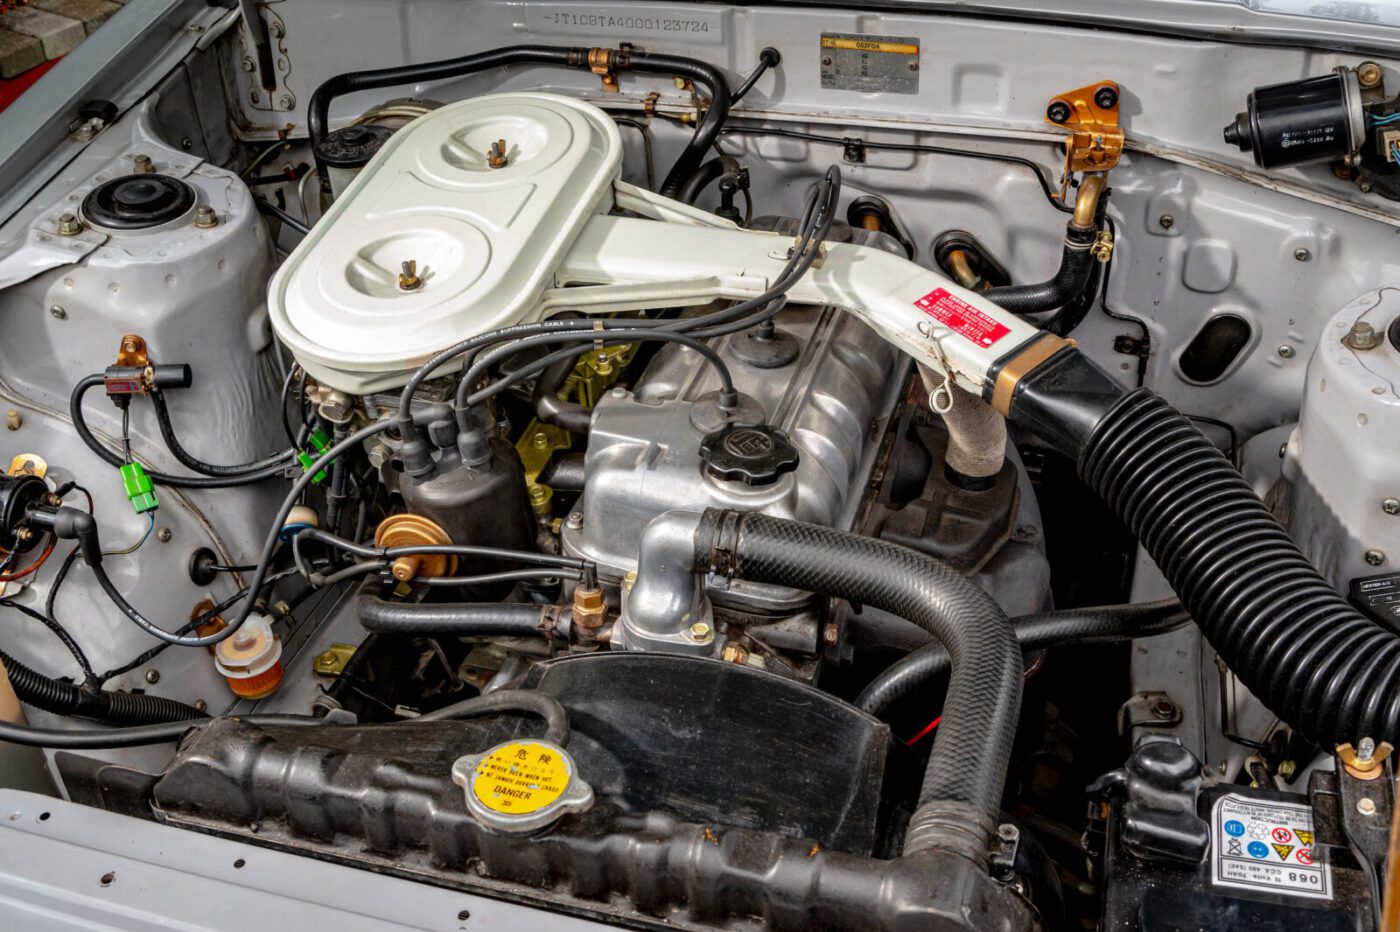 Toyota Celica ST 1.6 engine